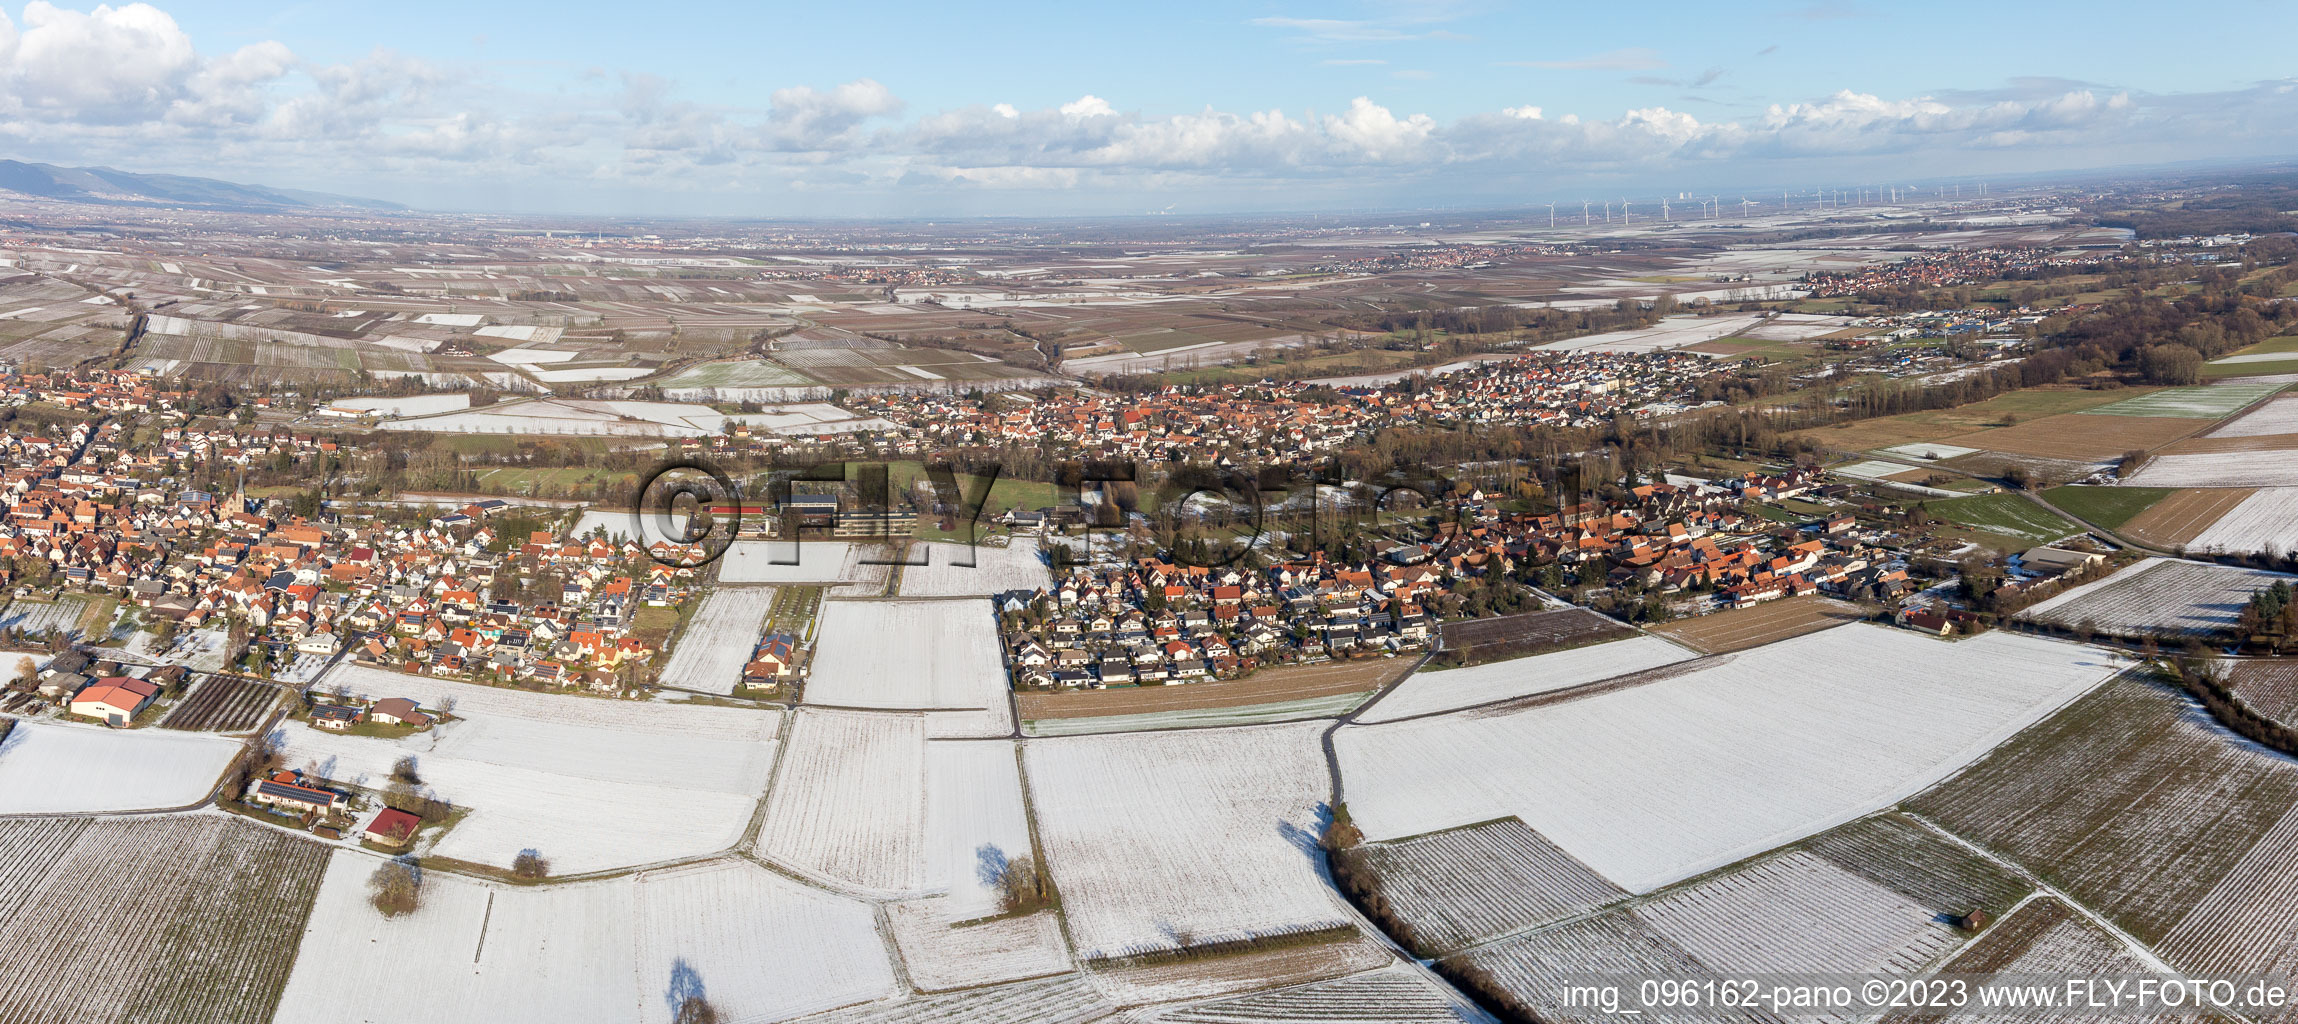 Photographie aérienne de Quartier Ingenheim in Billigheim-Ingenheim dans le département Rhénanie-Palatinat, Allemagne